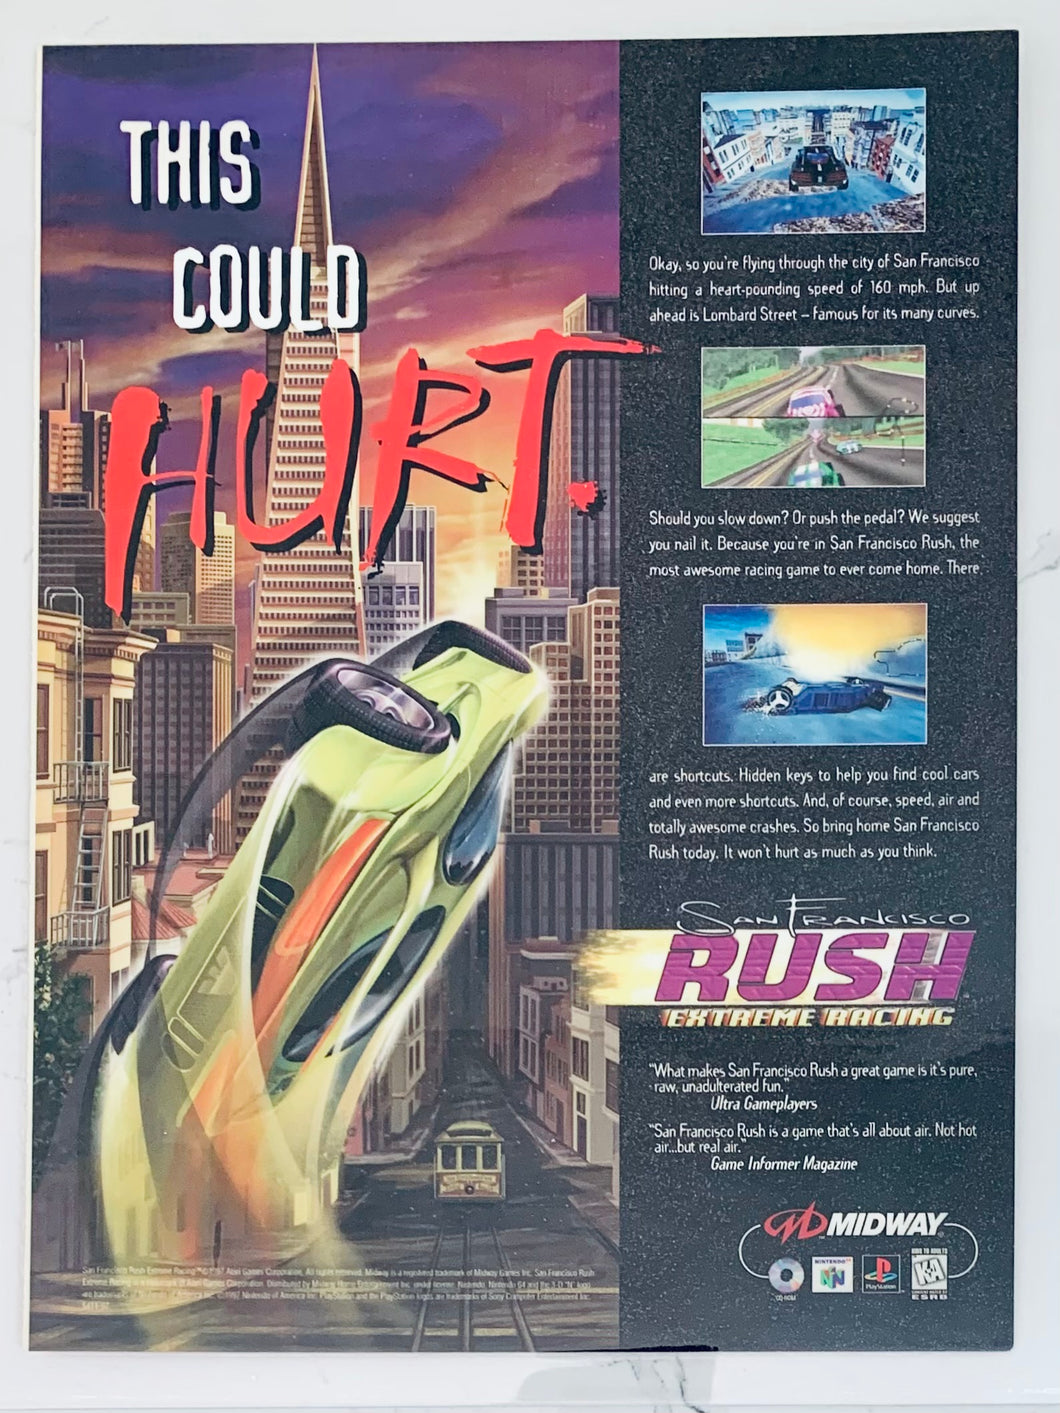 San Francisco Rush: Xtreme Racing - PlayStation N64 - Original Vintage Advertisement - Print Ads - Laminated A4 Poster